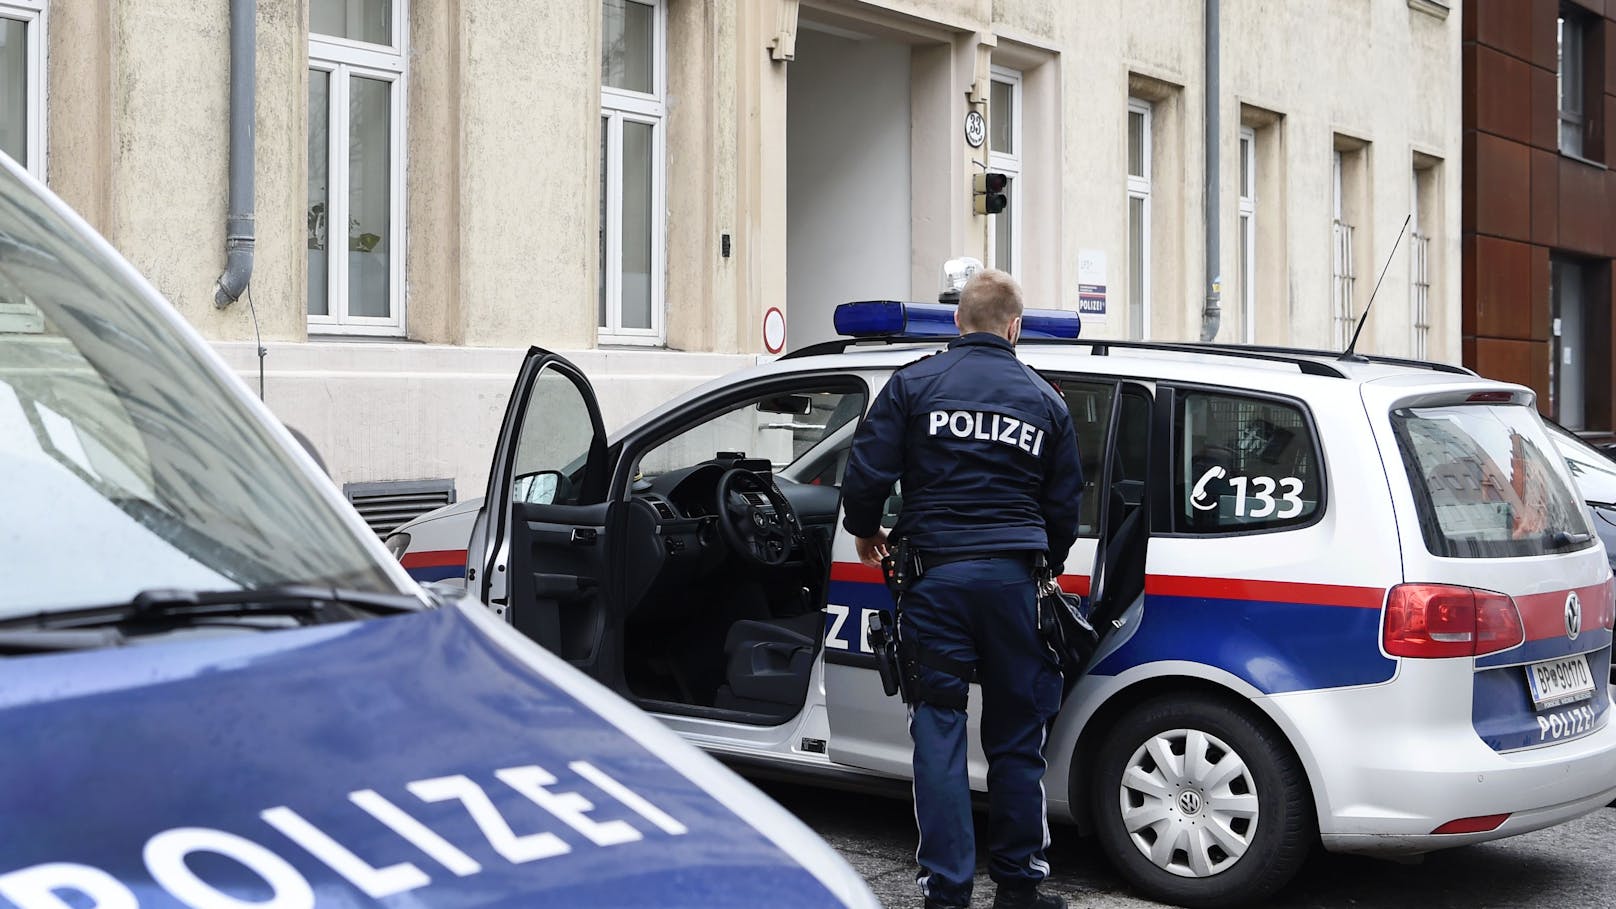 30-Jähriger verletzt Polizist in Wiener Amtsgebäude